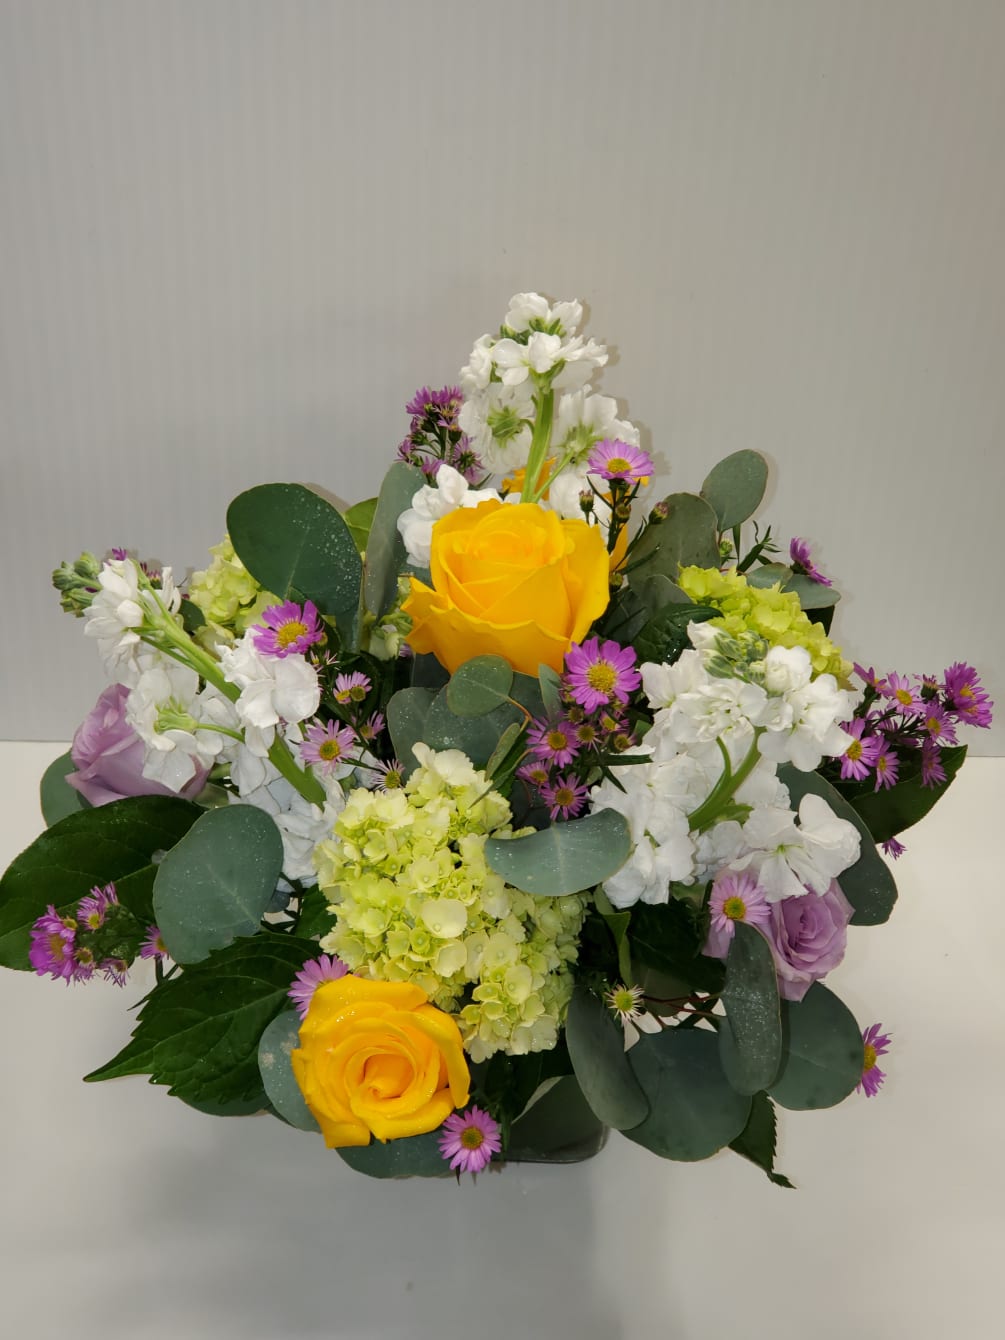 Spring square vase arrangements